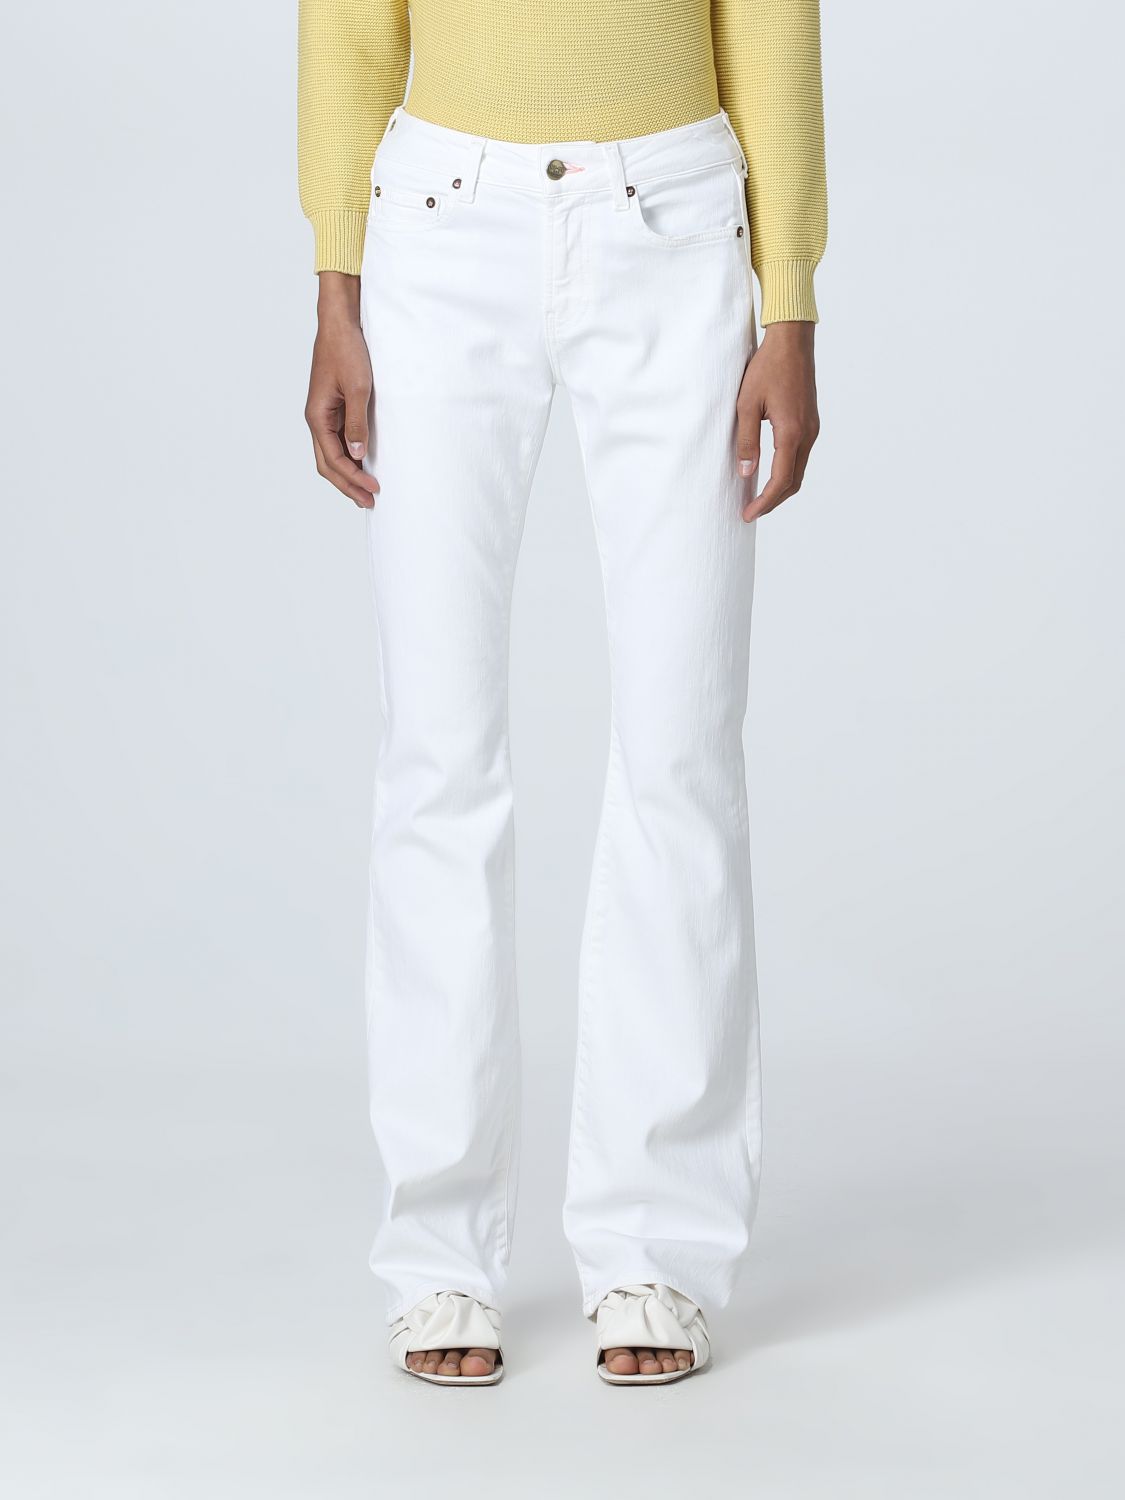 Washington Dee-Cee Jeans WASHINGTON DEE-CEE Woman colour White